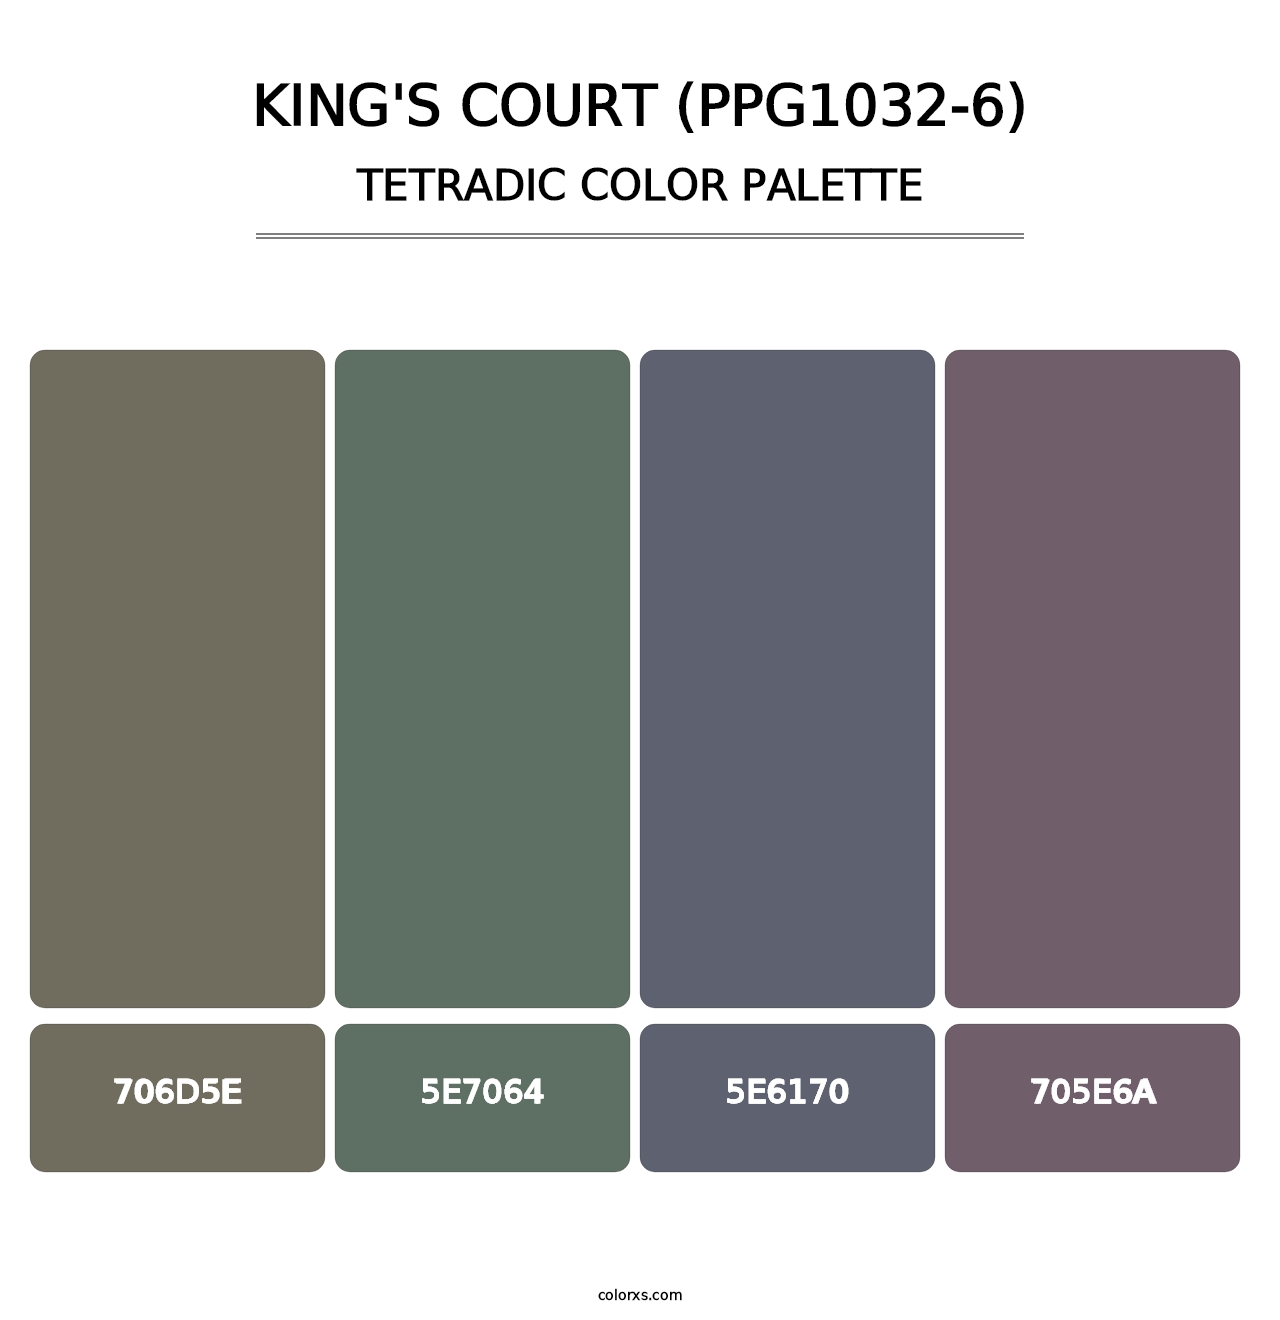 King's Court (PPG1032-6) - Tetradic Color Palette